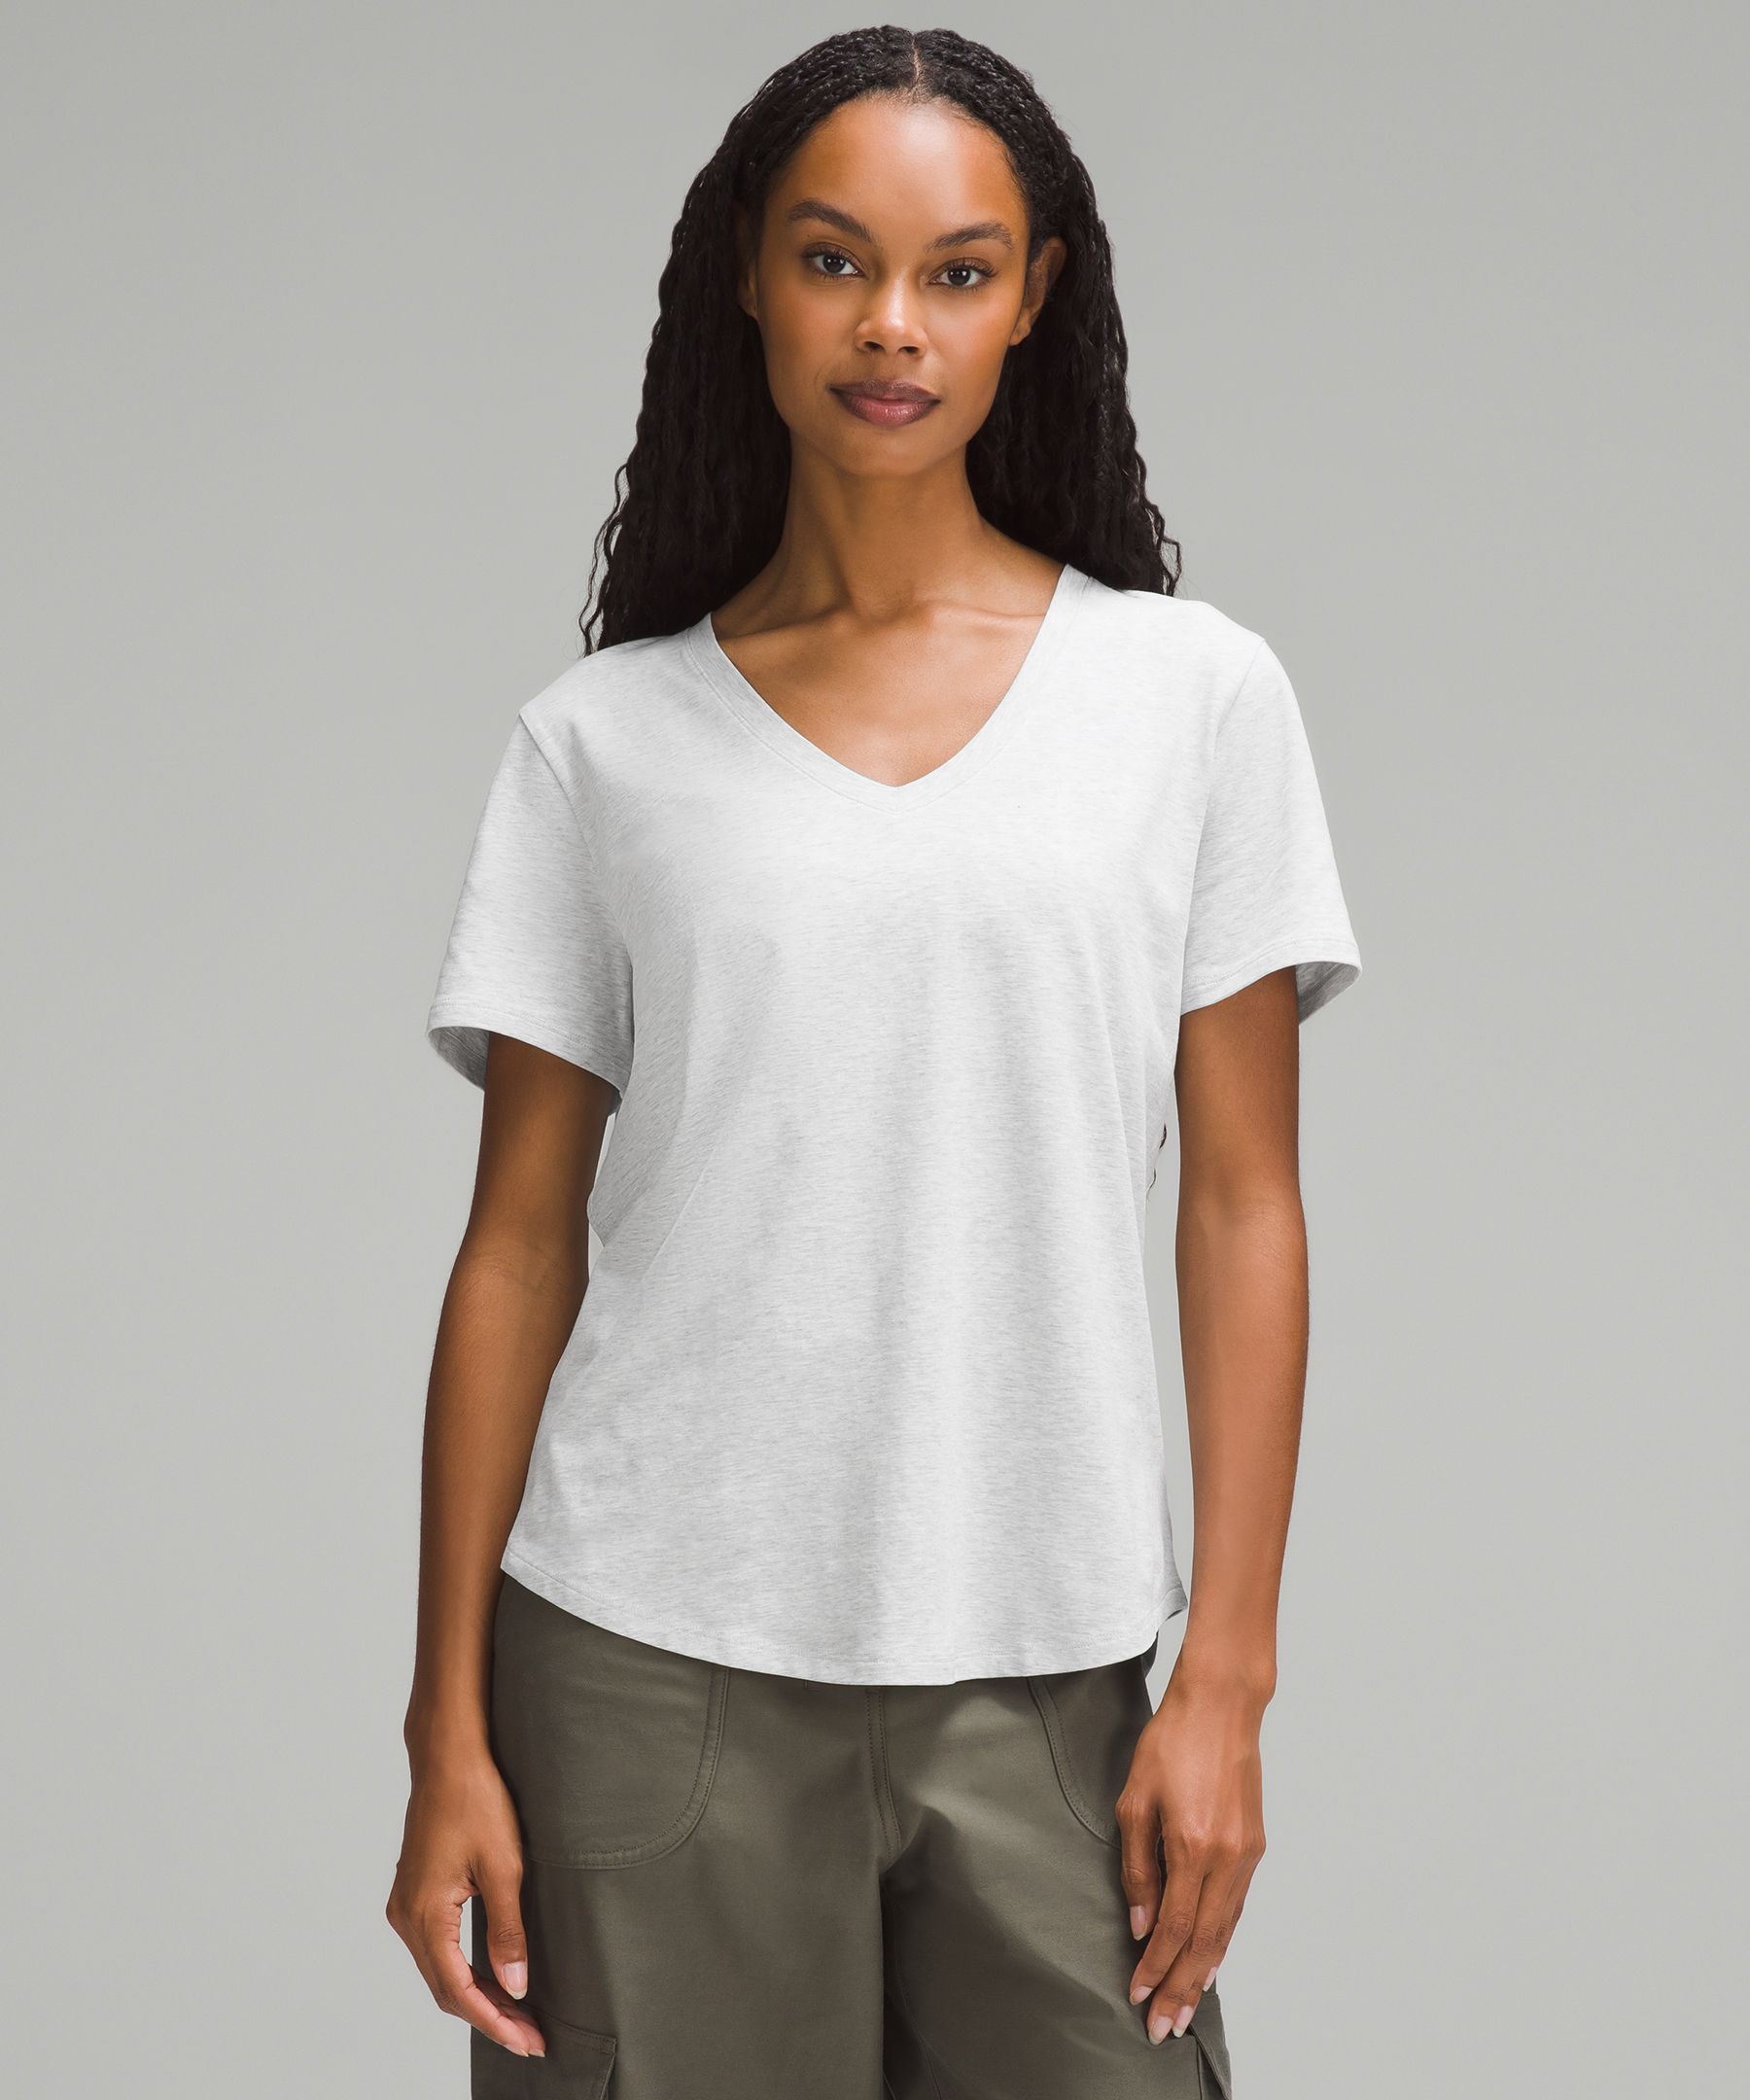 Women's White Short Sleeve Shirts